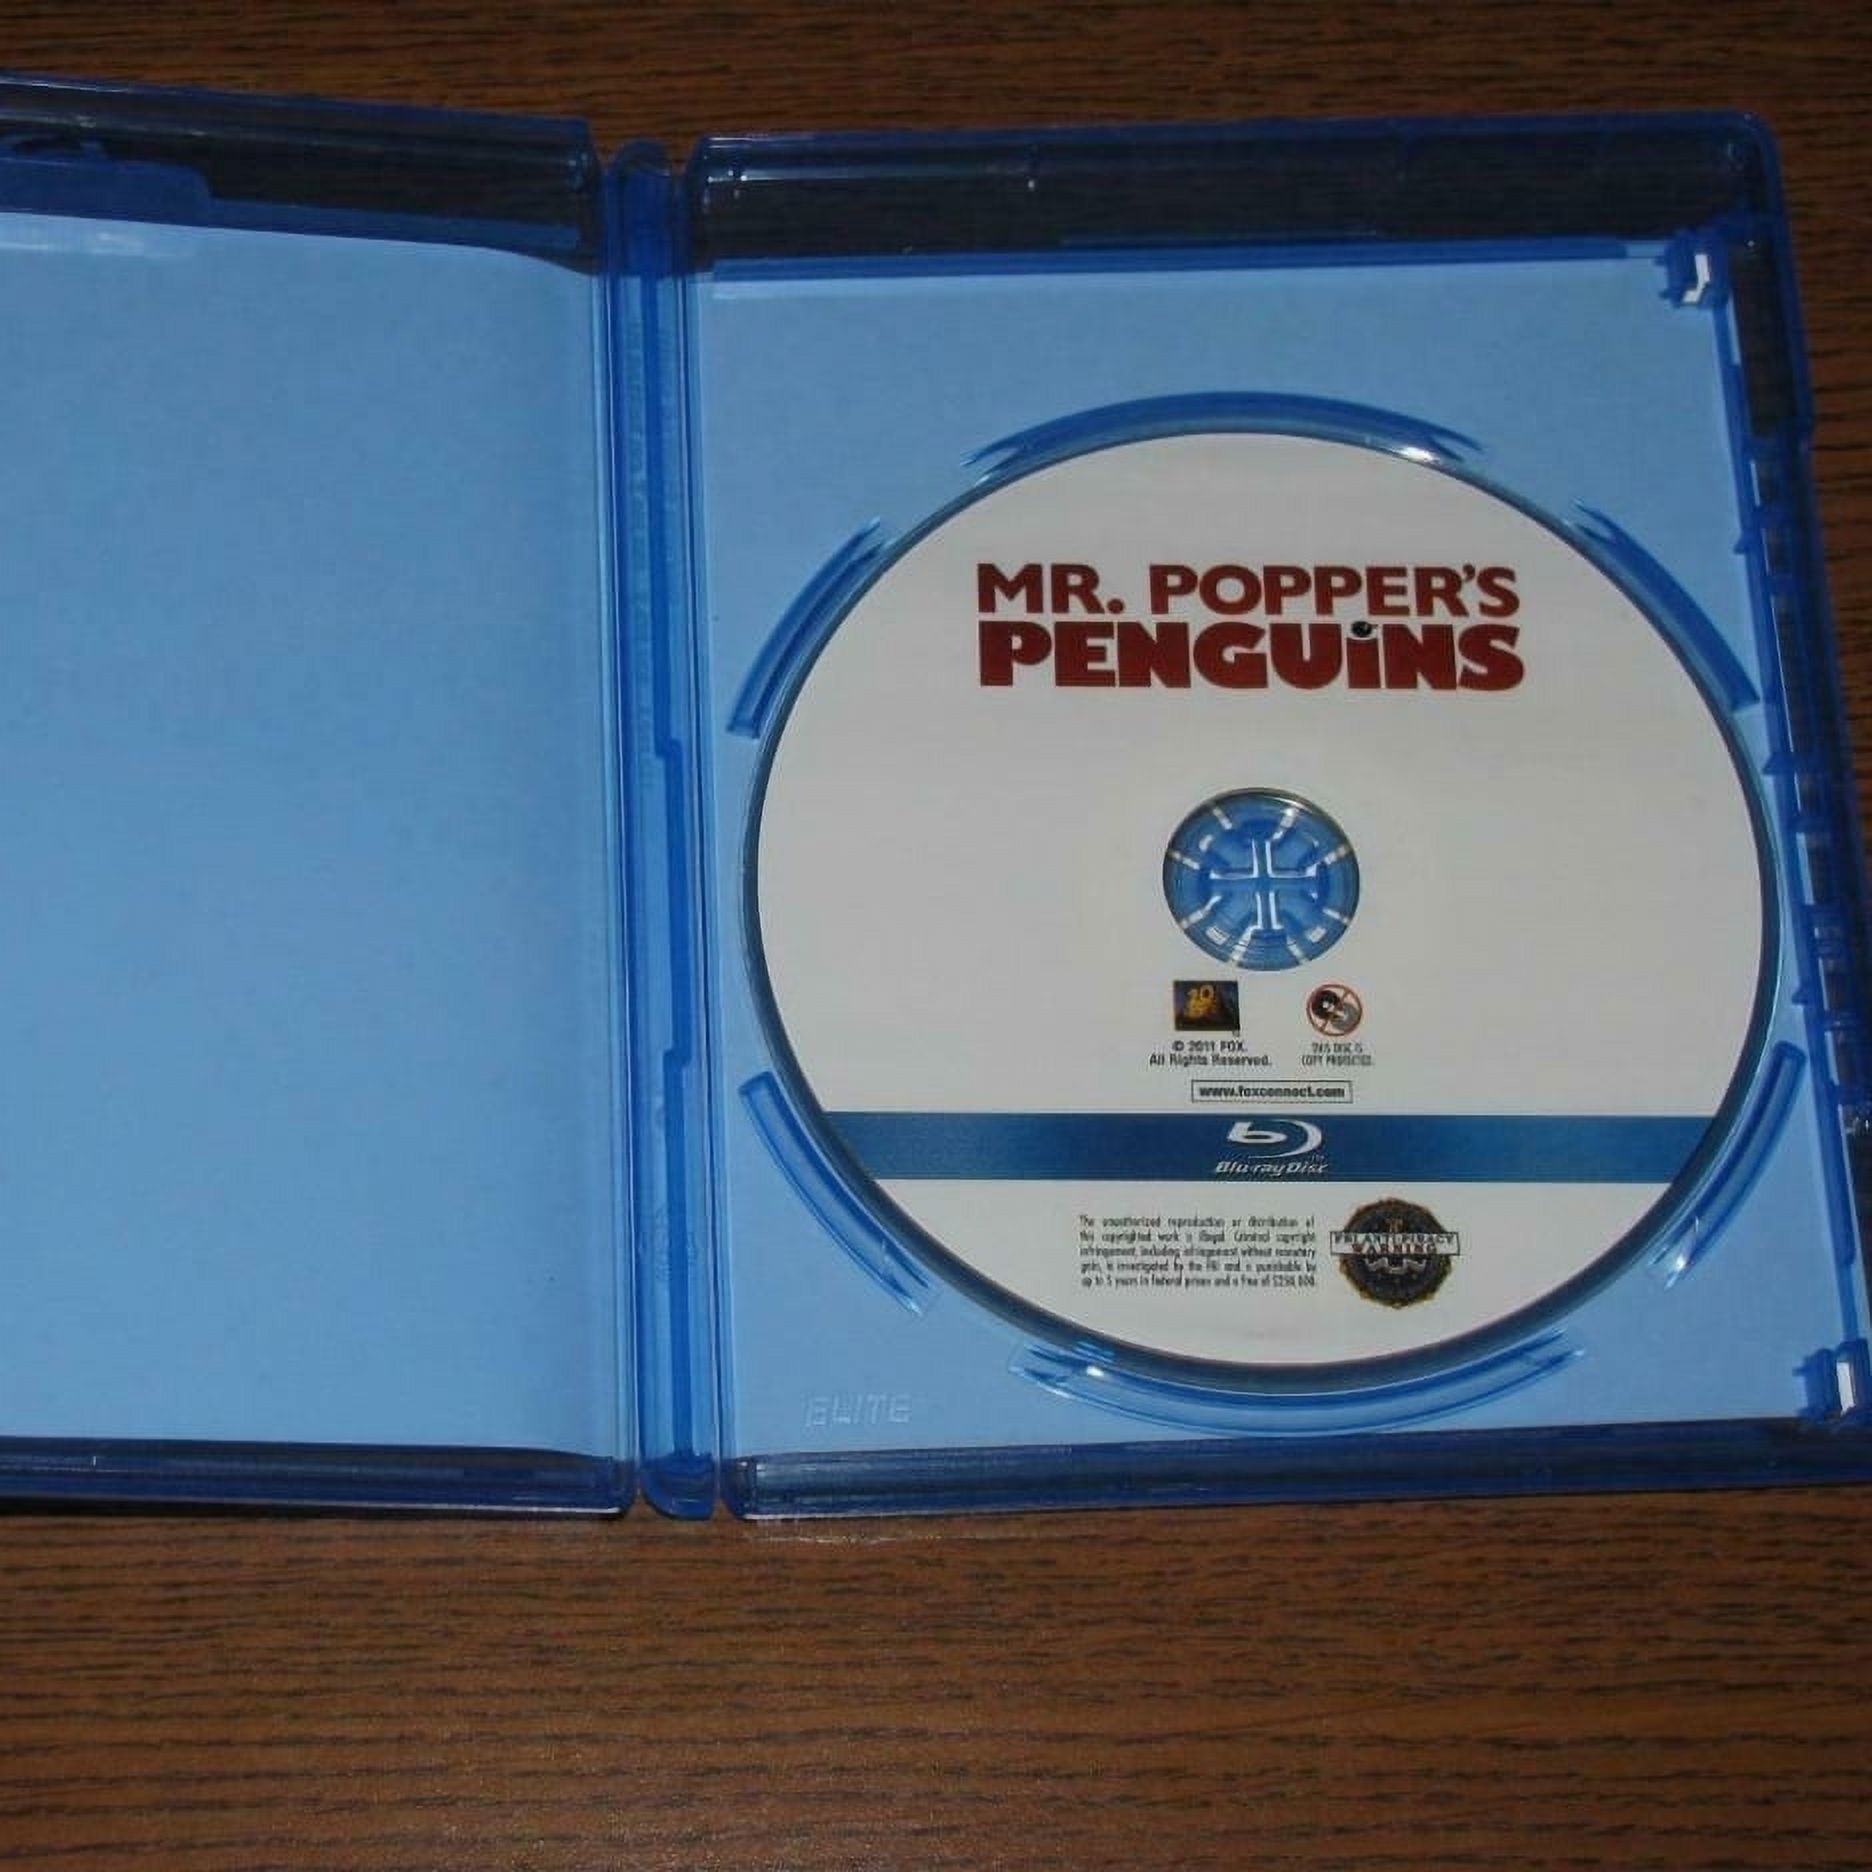 Mr. Poppers Penguins (Blu-ray, 1-Disc Set, No Digital Copy) - Like New - image 2 of 3